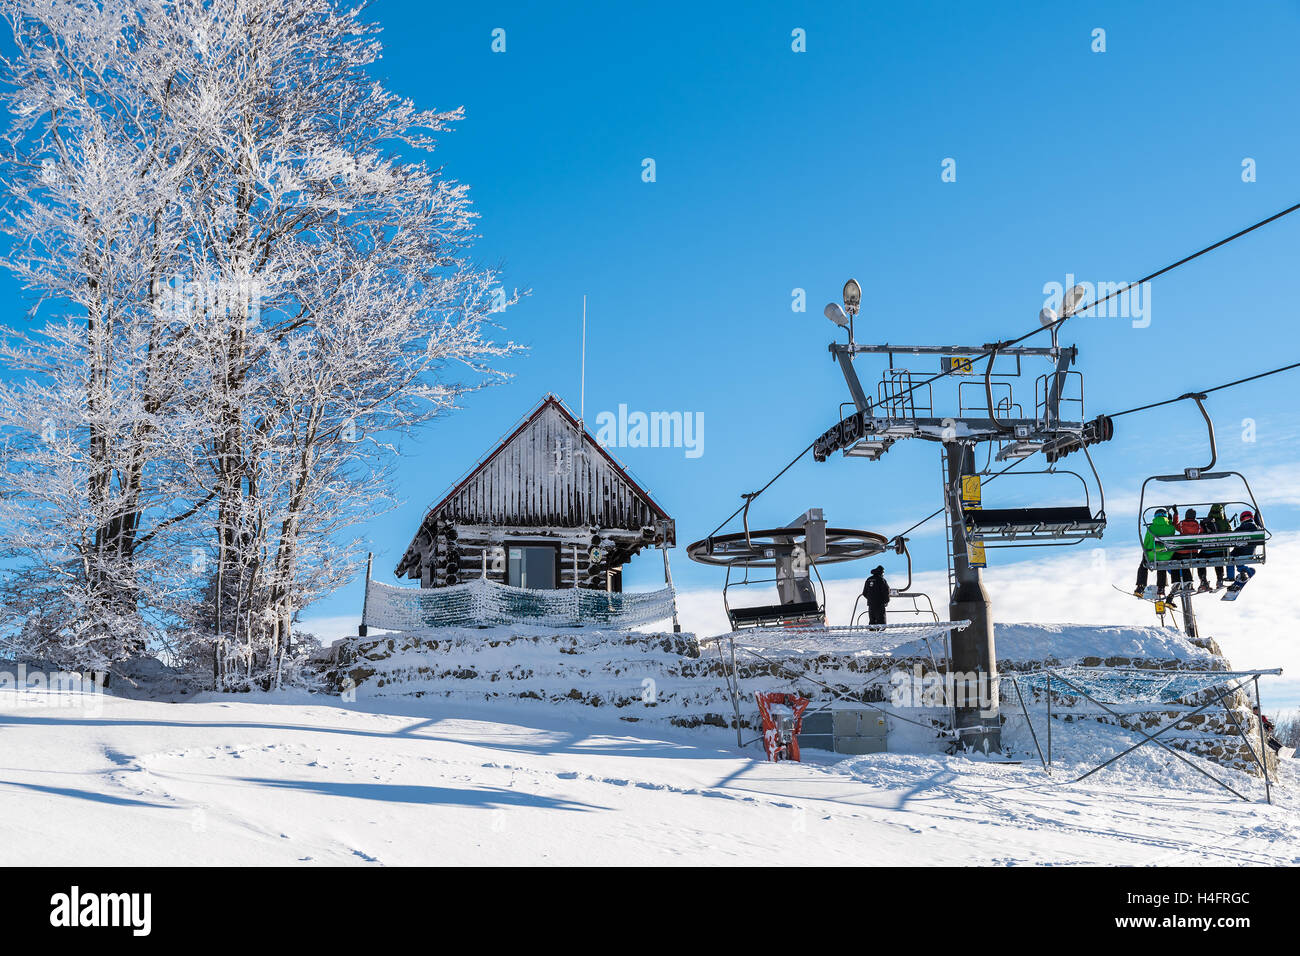 WIERCHOMLA SKI RESORT, POLAND - DEC 31, 2014: ski lift and slope in winter landscape of Beskid Sadecki Mountains. Skiing is popular sport in southern Poland. Stock Photo